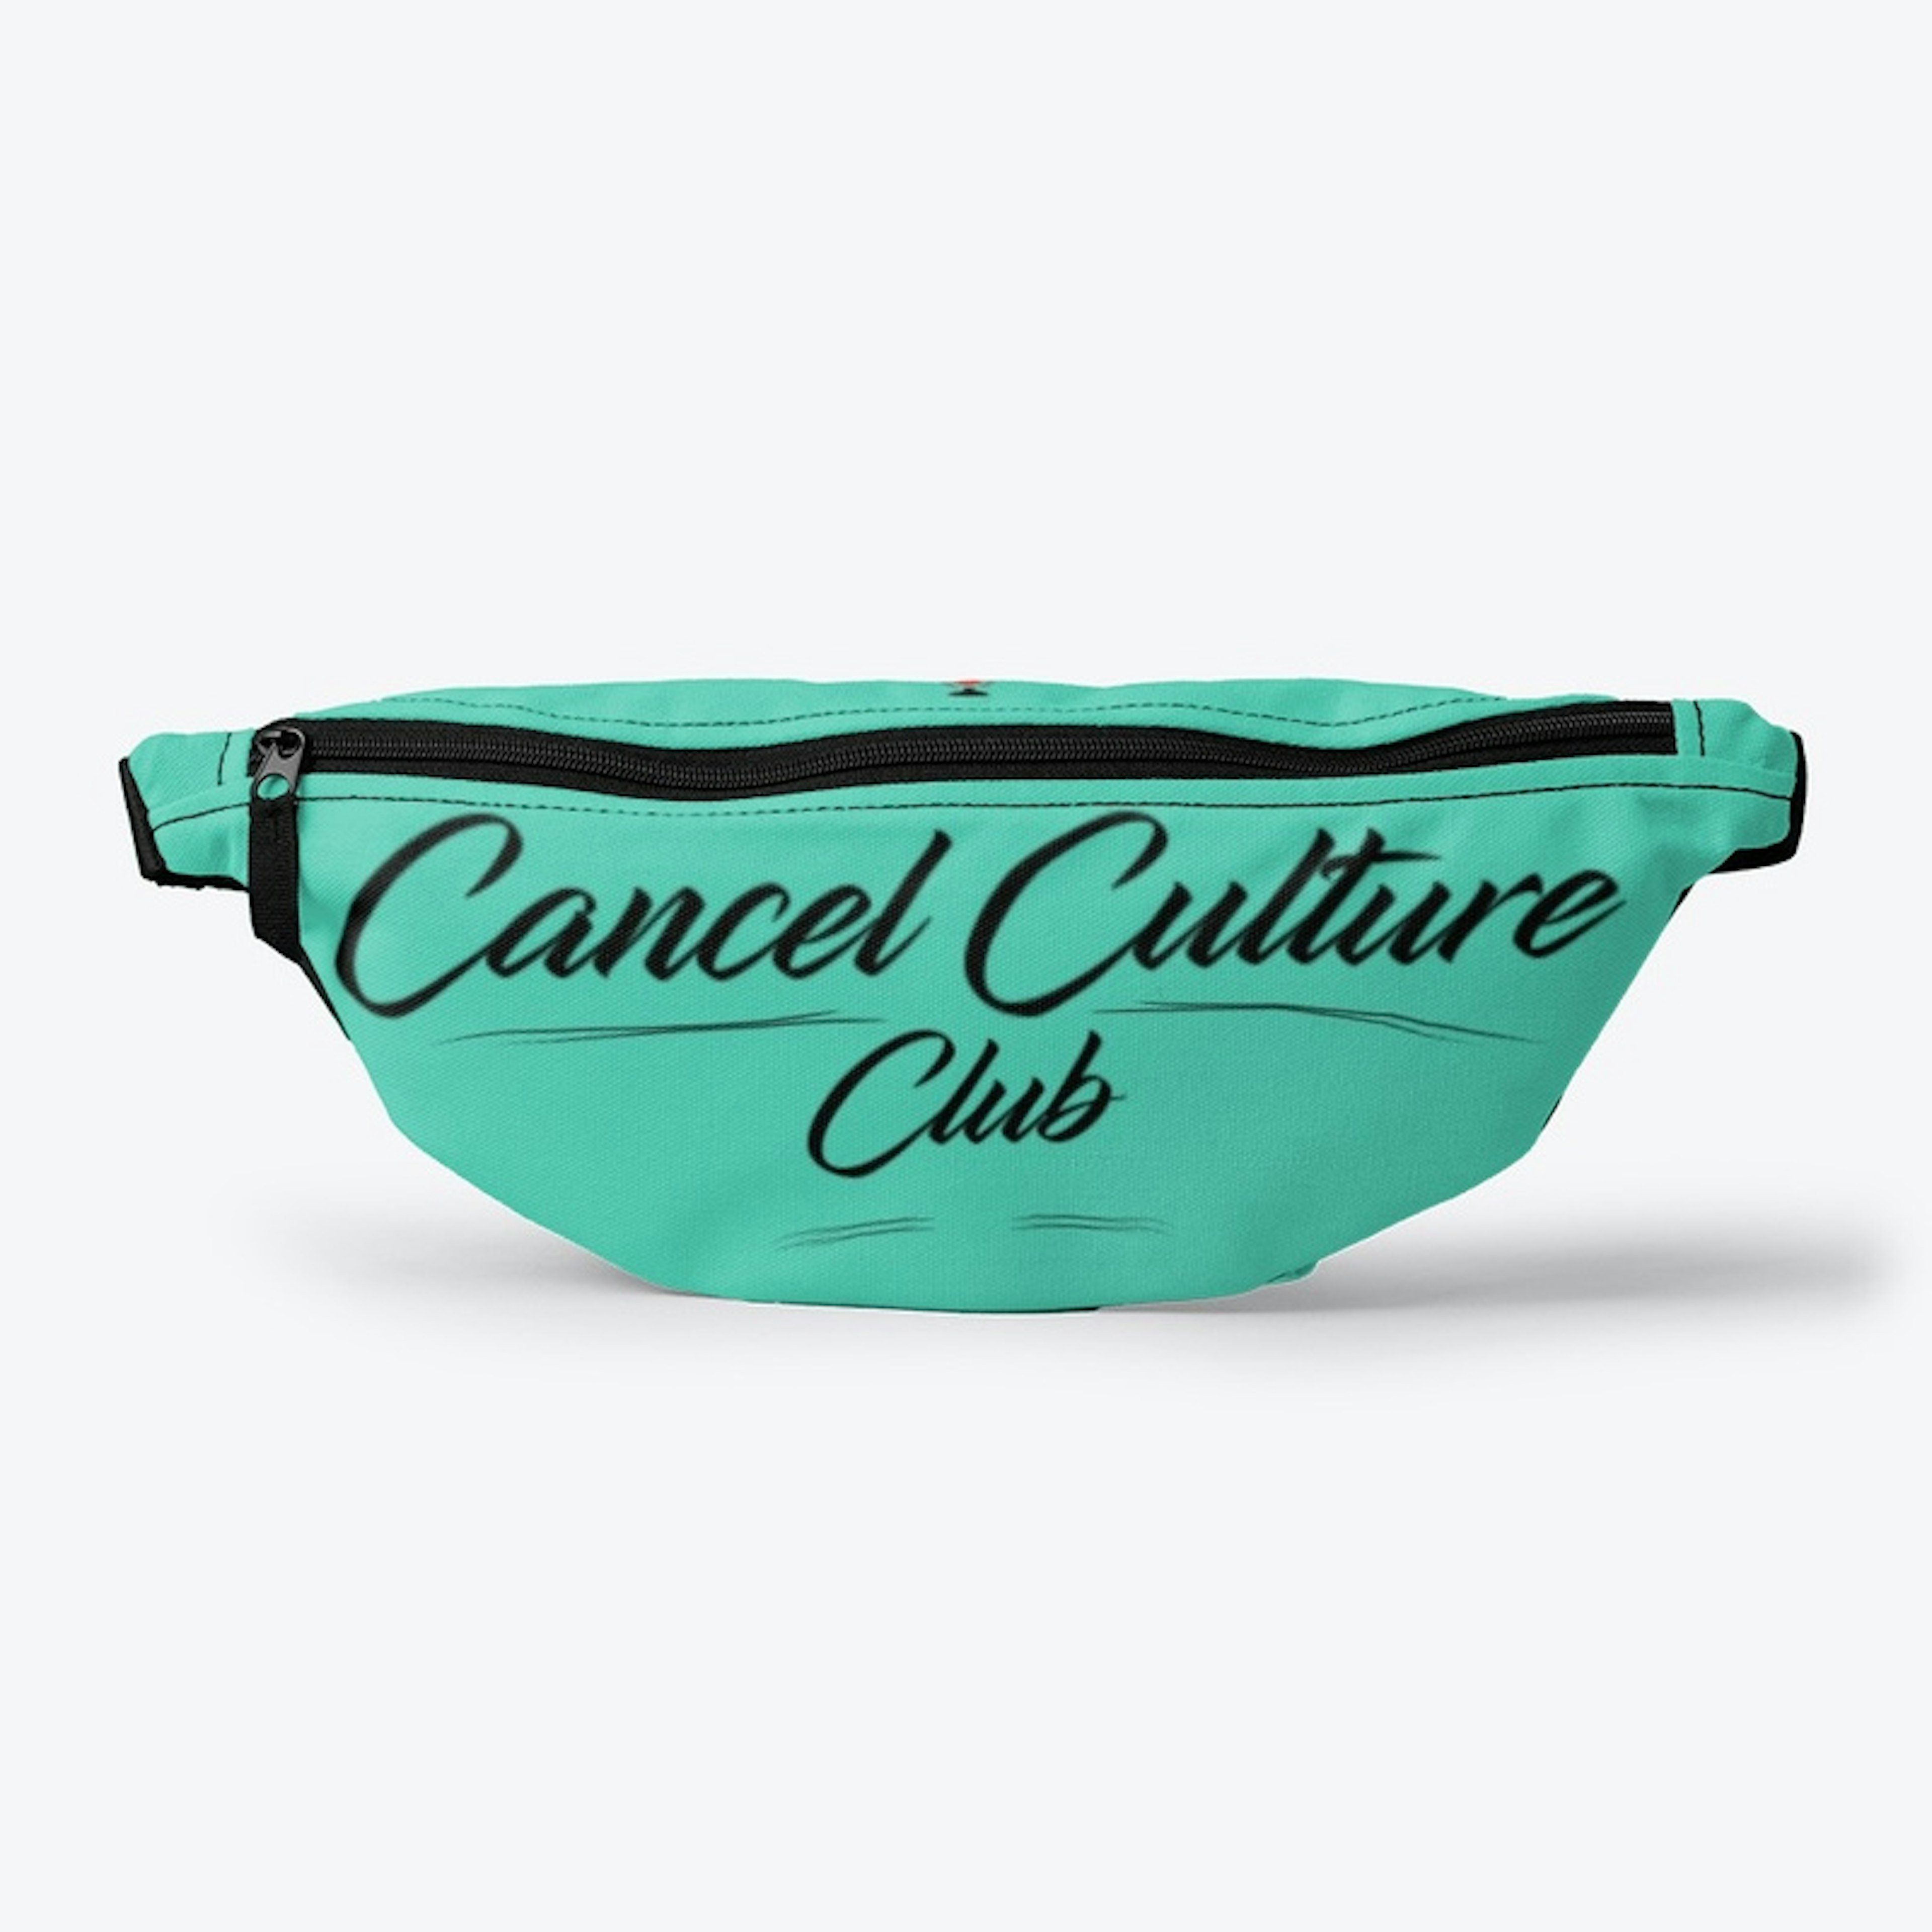 Cancel Culture Club